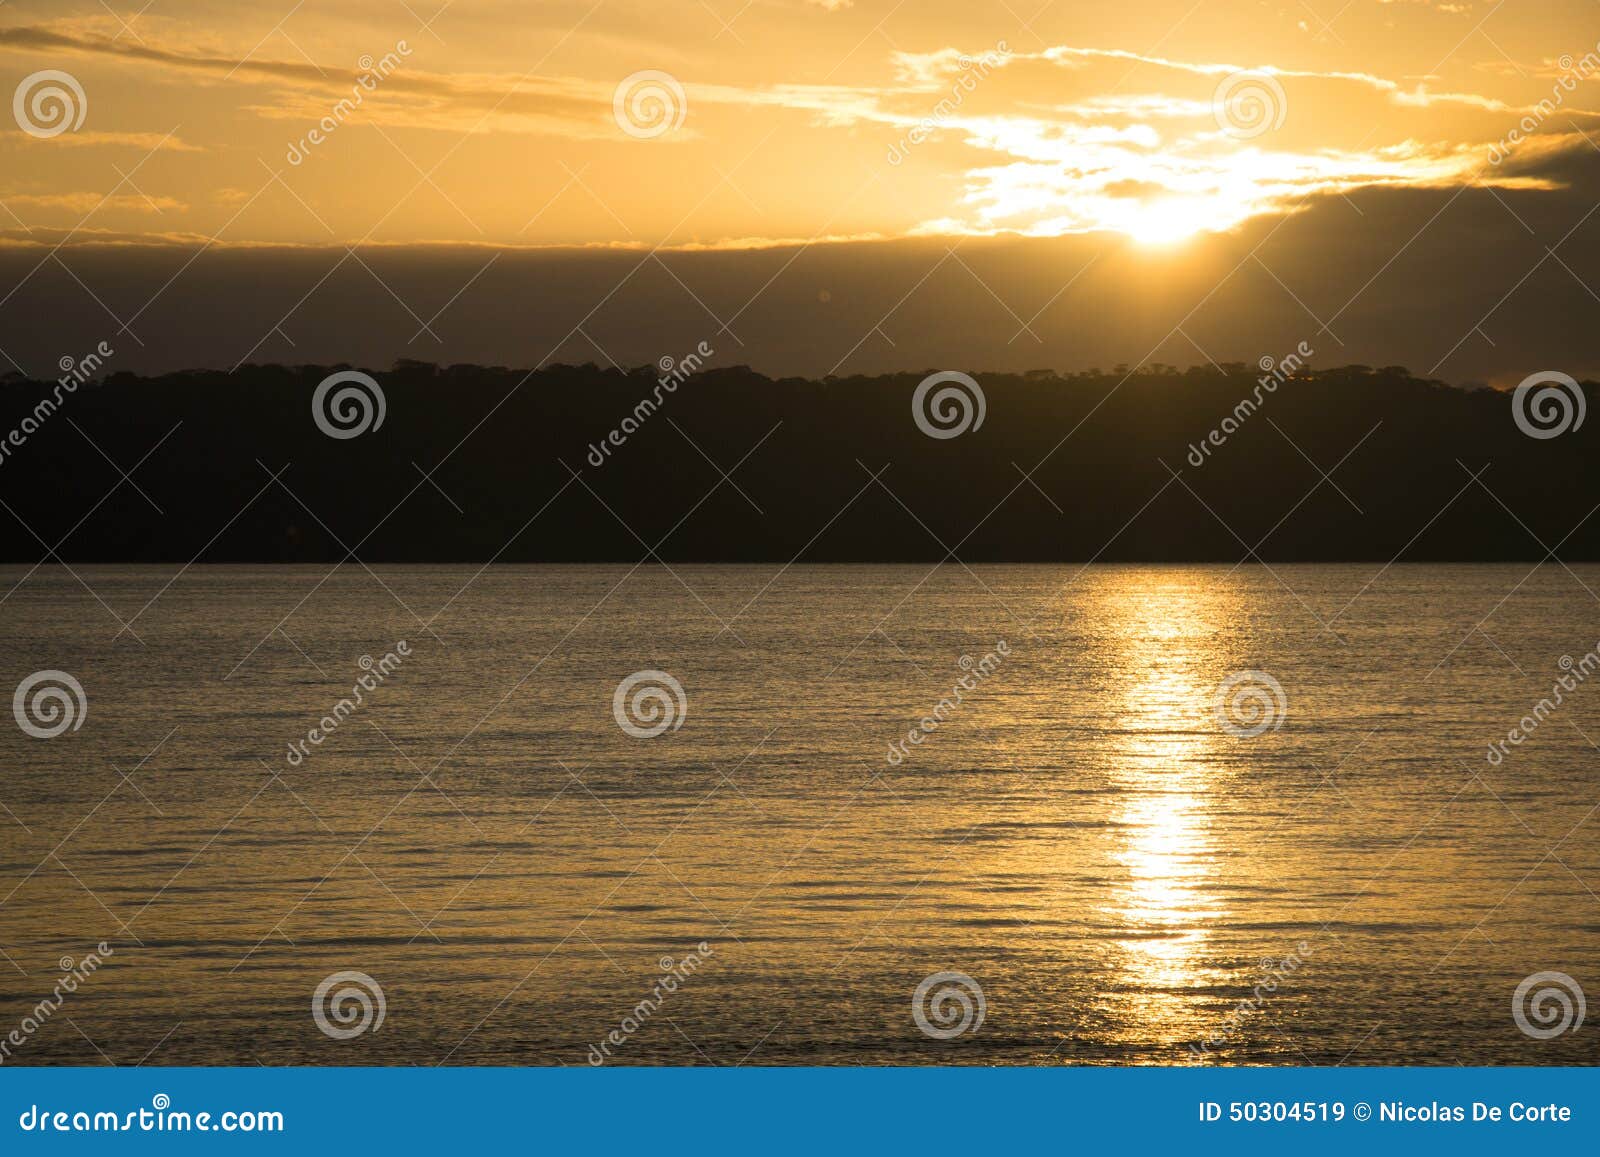 sunrise over lake apoyo near granada, nicaragua